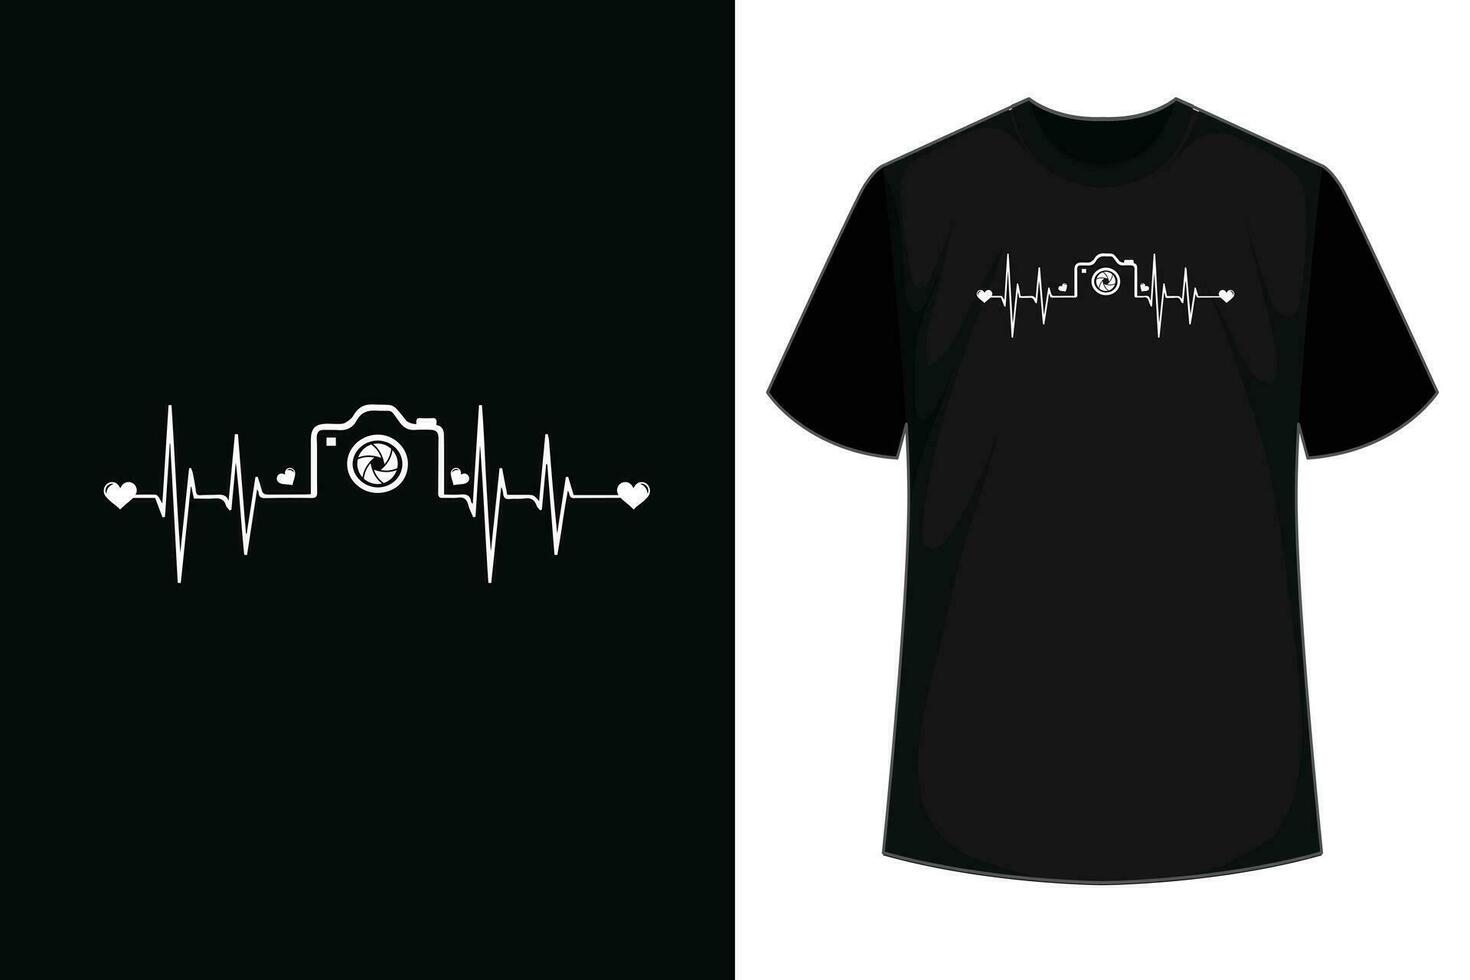 Photographer T-Shirt Gift Idea HeartBeat Photography Camera T-Shirt vector